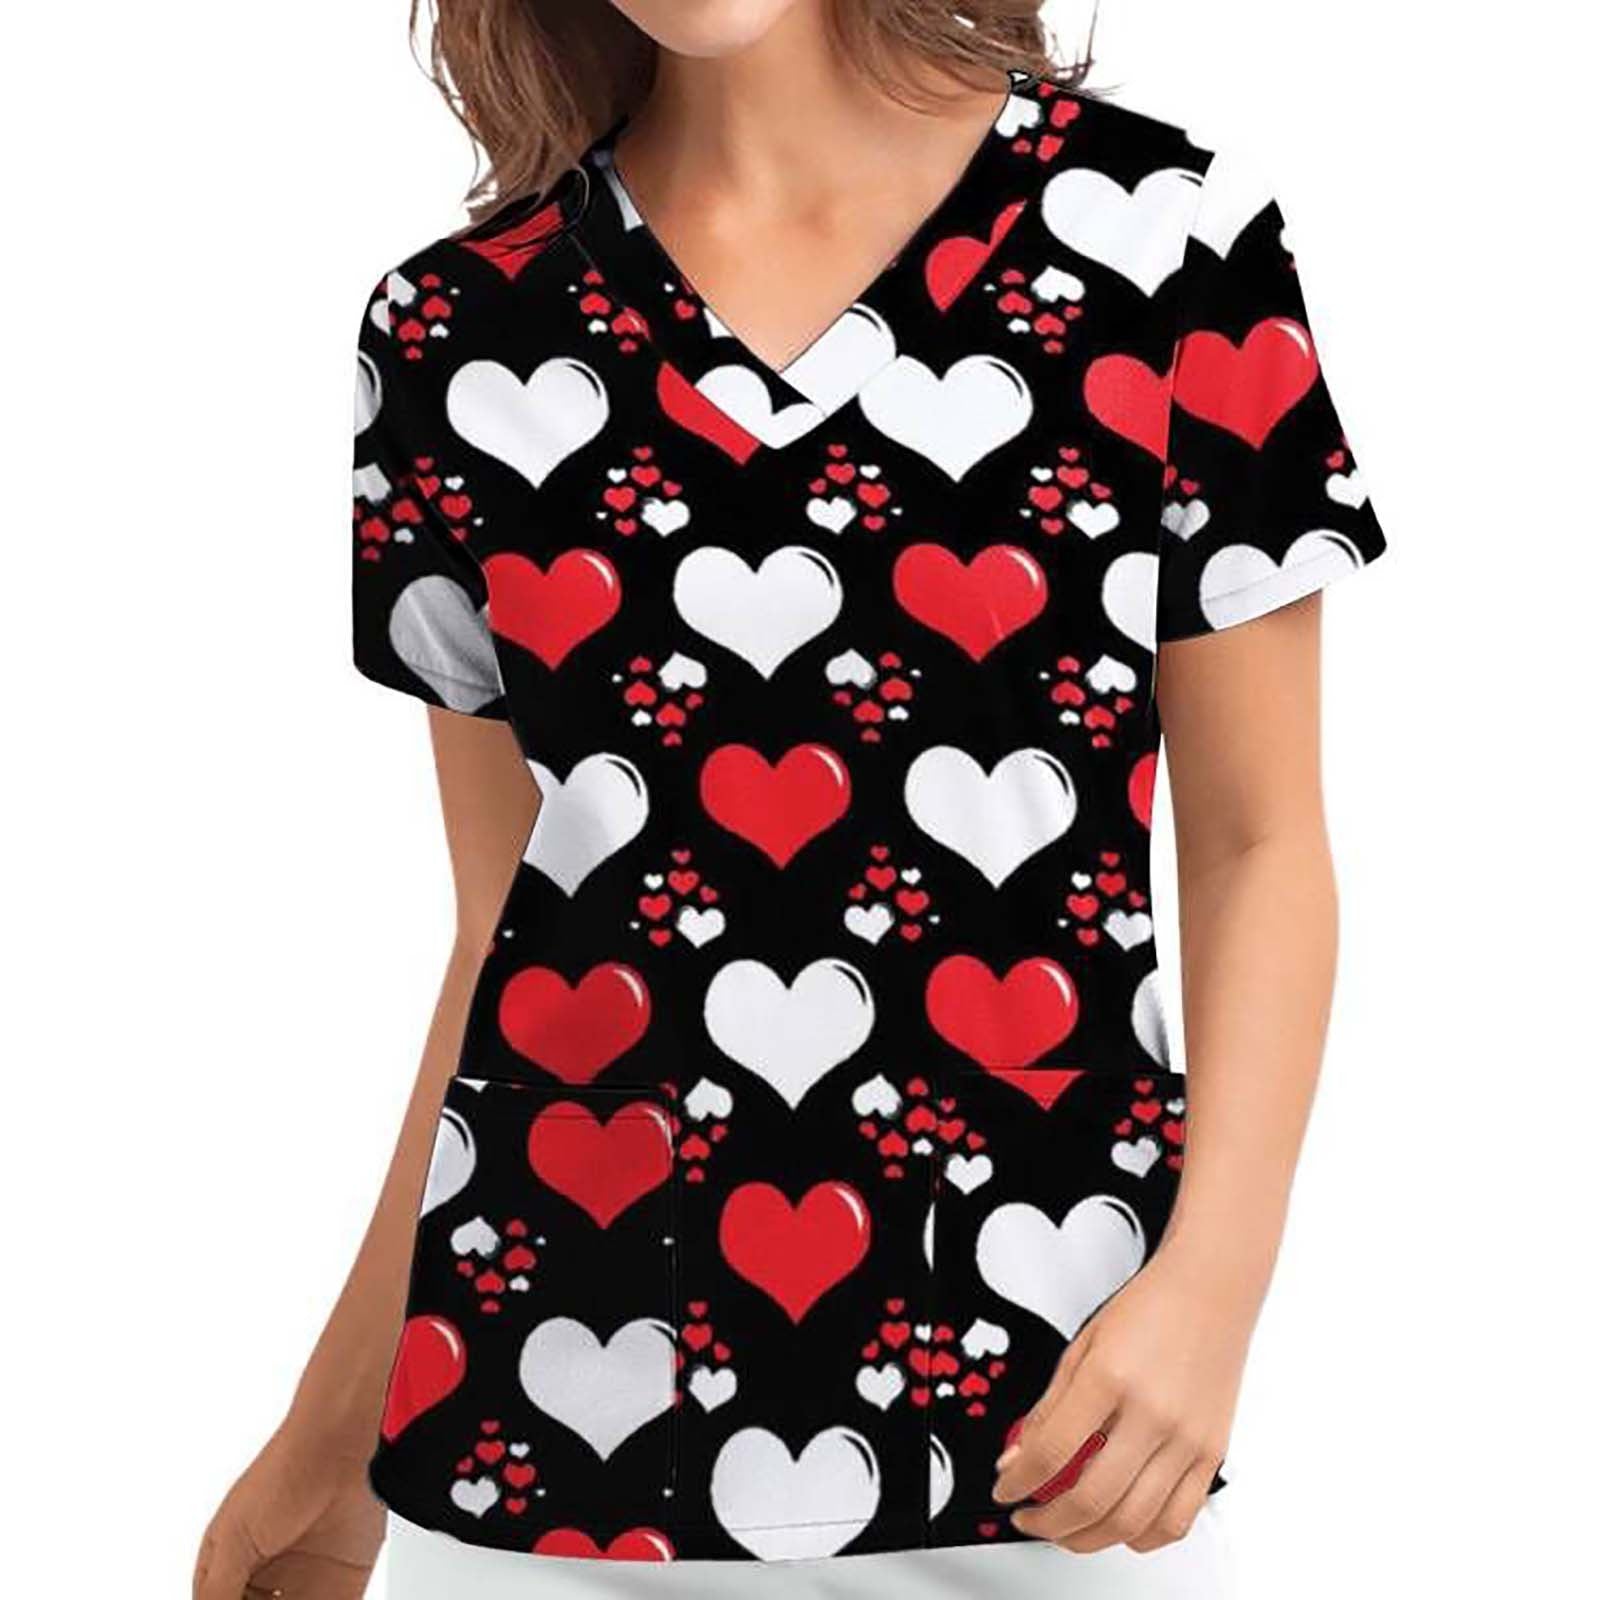 Cute Nurse Uniforms Women up to xxL Size Animal Print Pocket Casual Short Sleeve T-shirt V-neck Nursing Scrubs